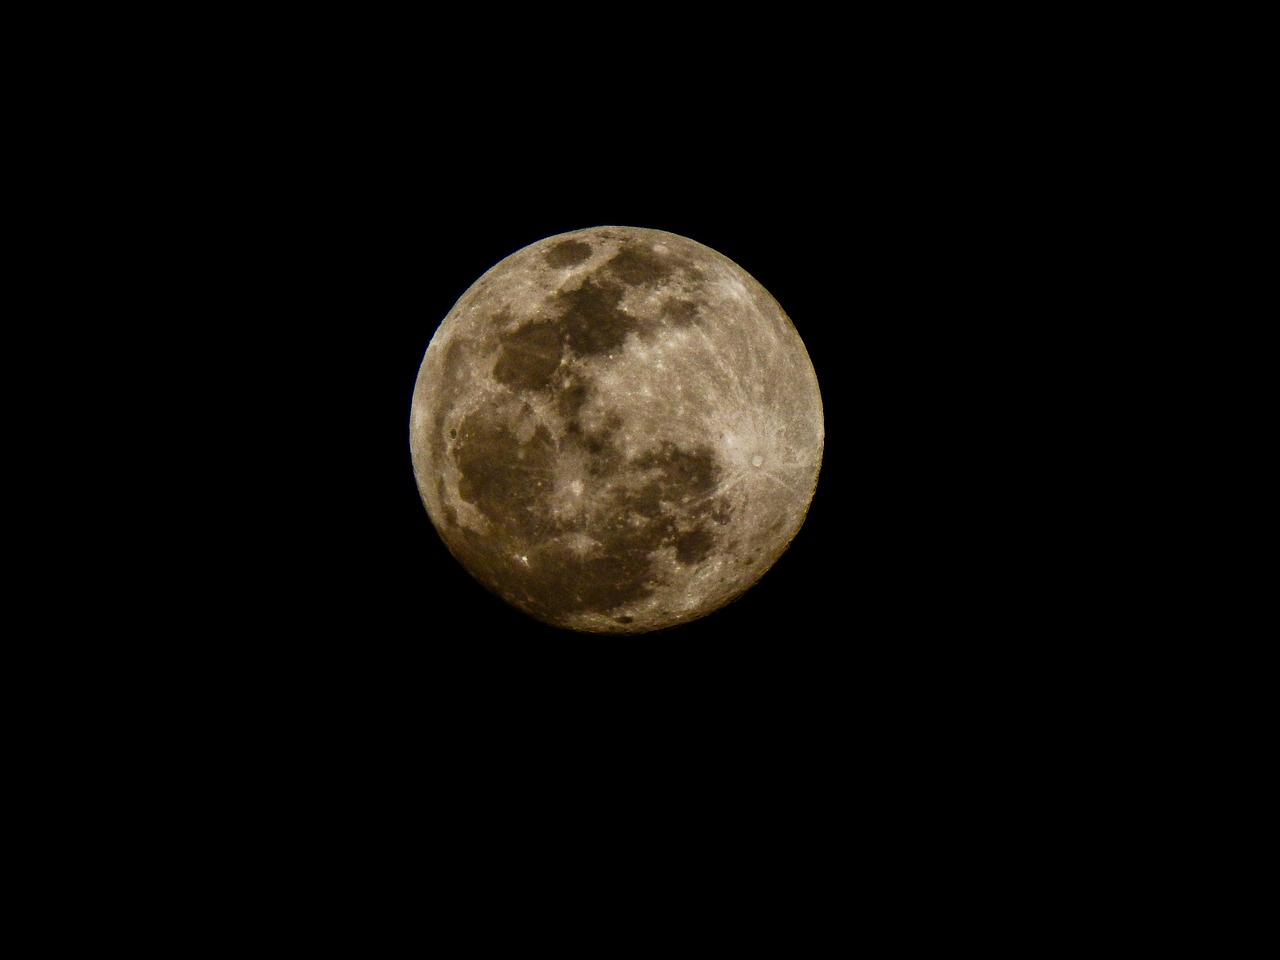 Image - full moon moon night sky crater